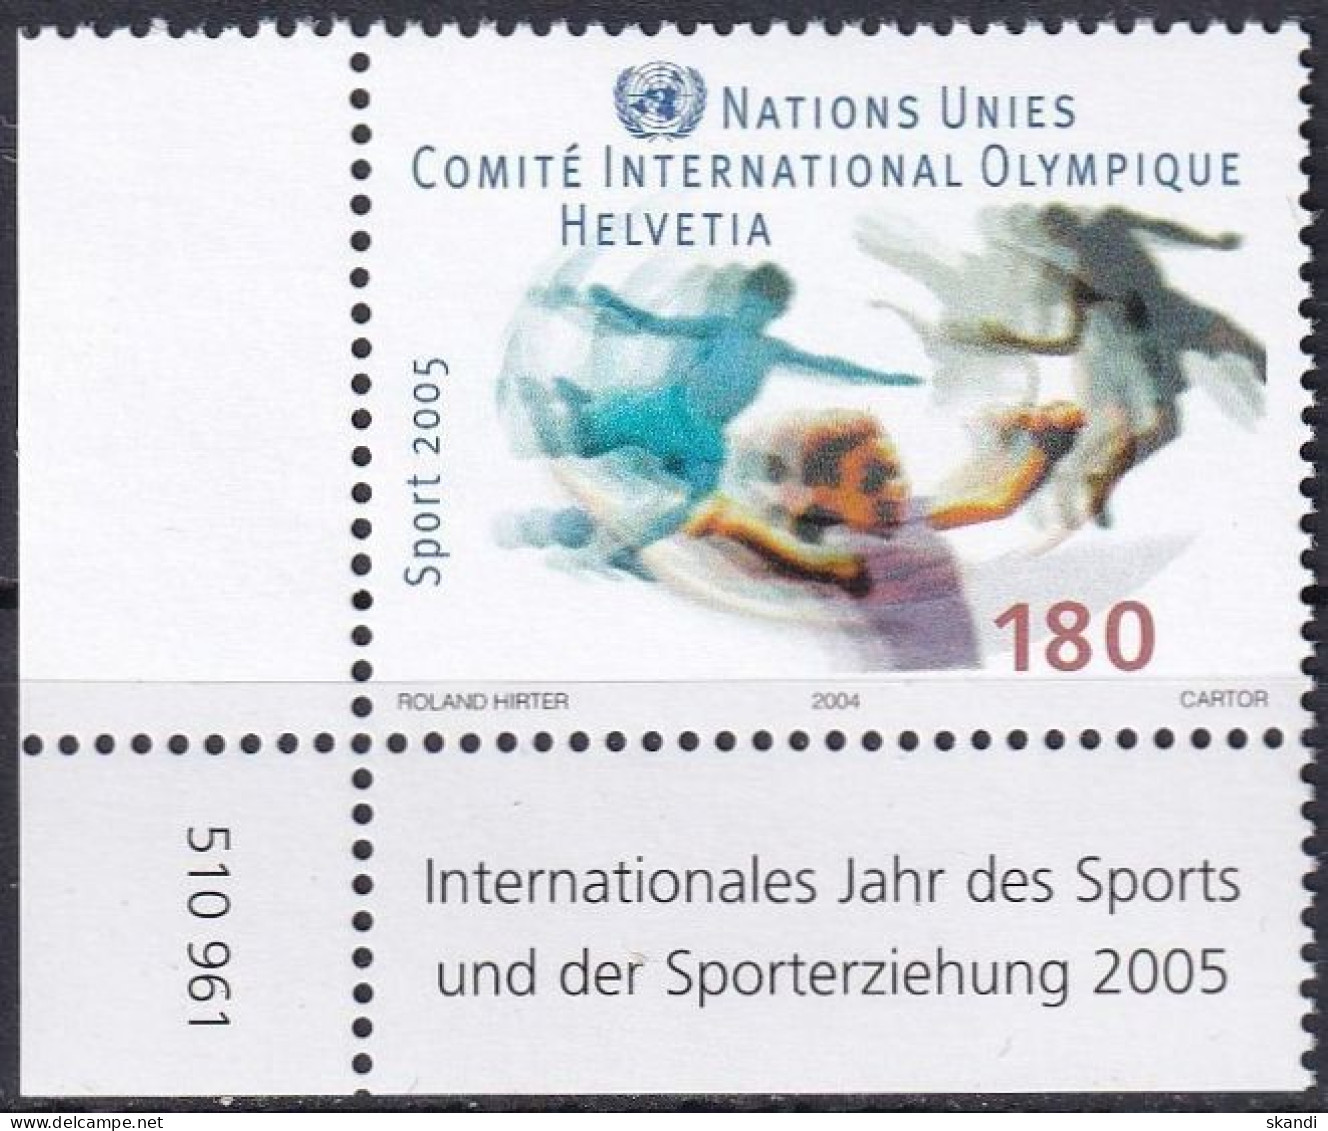 UNO GENF 2004 Mi-Nr. 507 Eckrand ** MNH - Unused Stamps